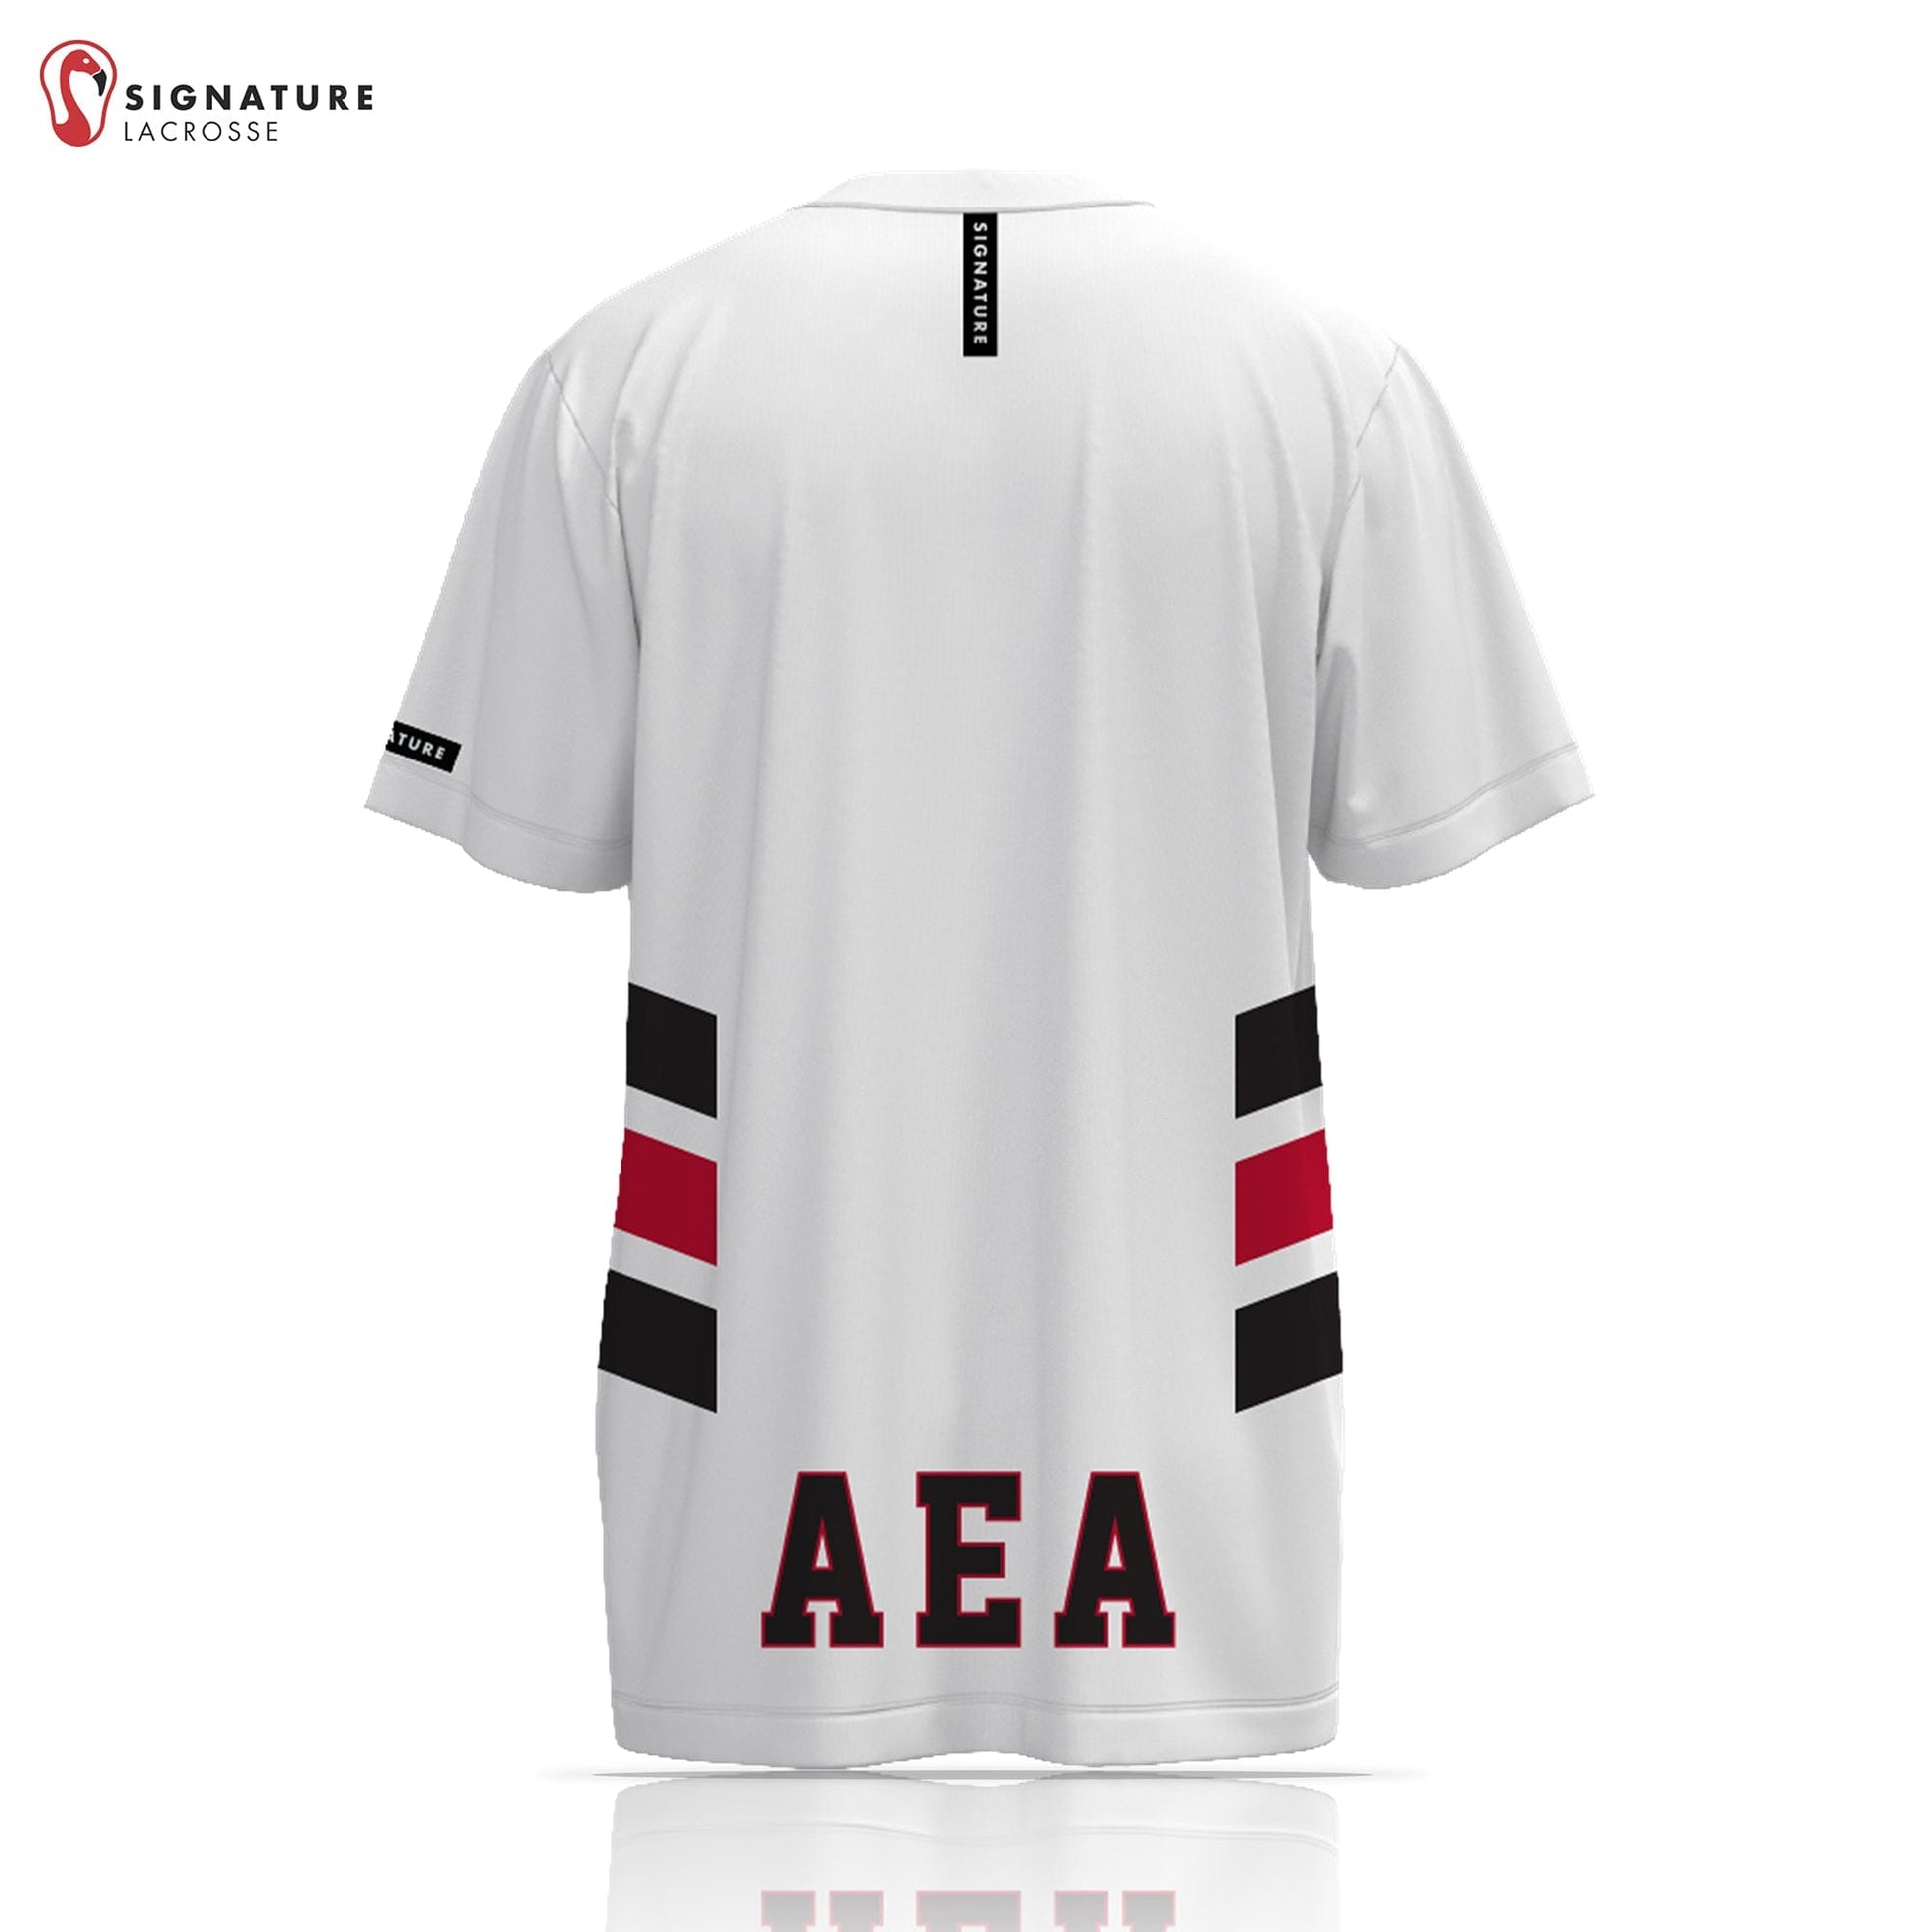 Henderson Wranglers Lacrosse Men’s Short Sleeve Shooter Shirt Signature Lacrosse